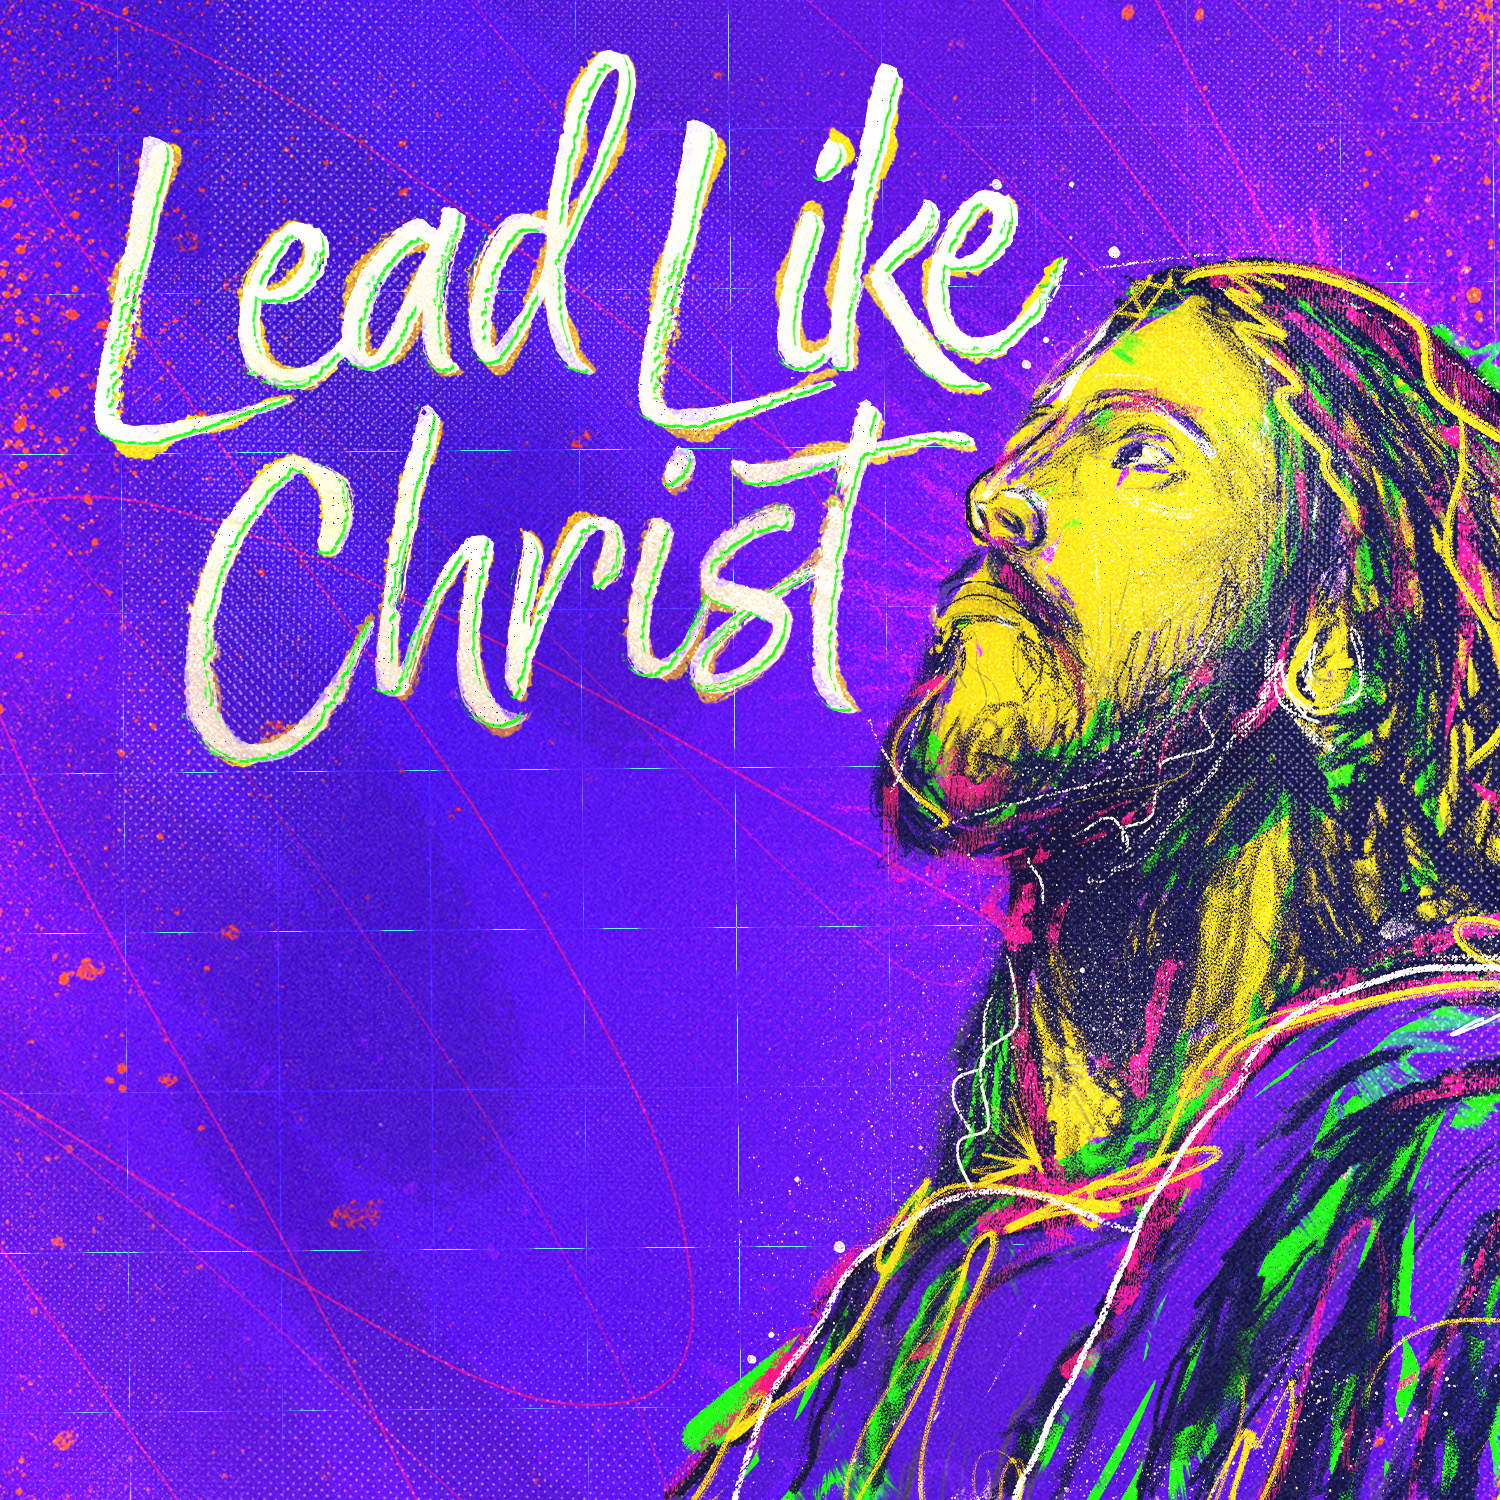 Lead Like Christ - Week 2 - Led By The Spirit